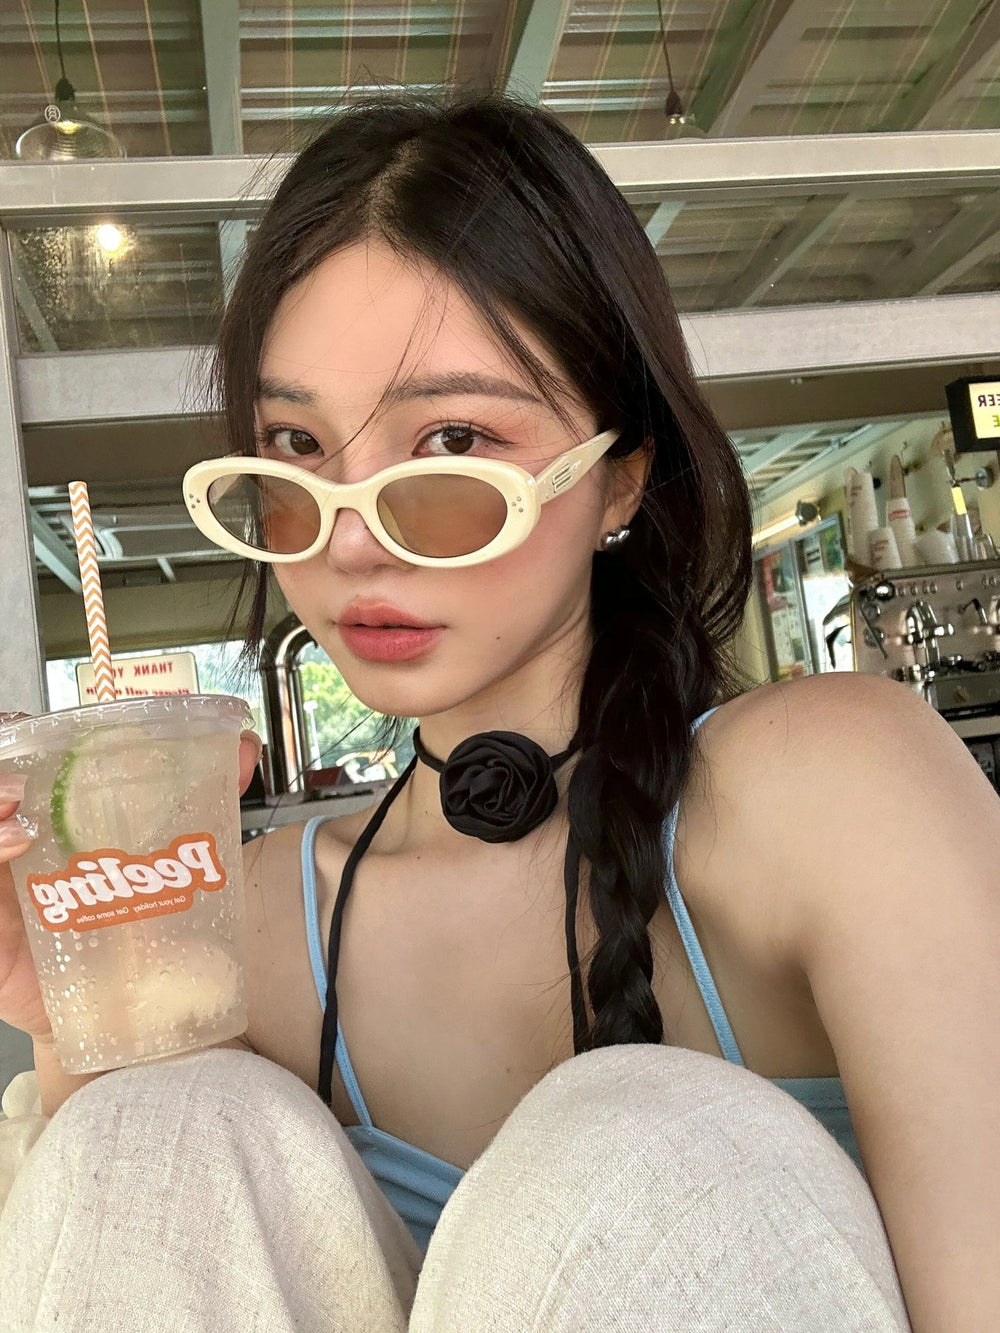 Stylish woman with Korean fashion sunglasses, enjoying a beverage in hand.